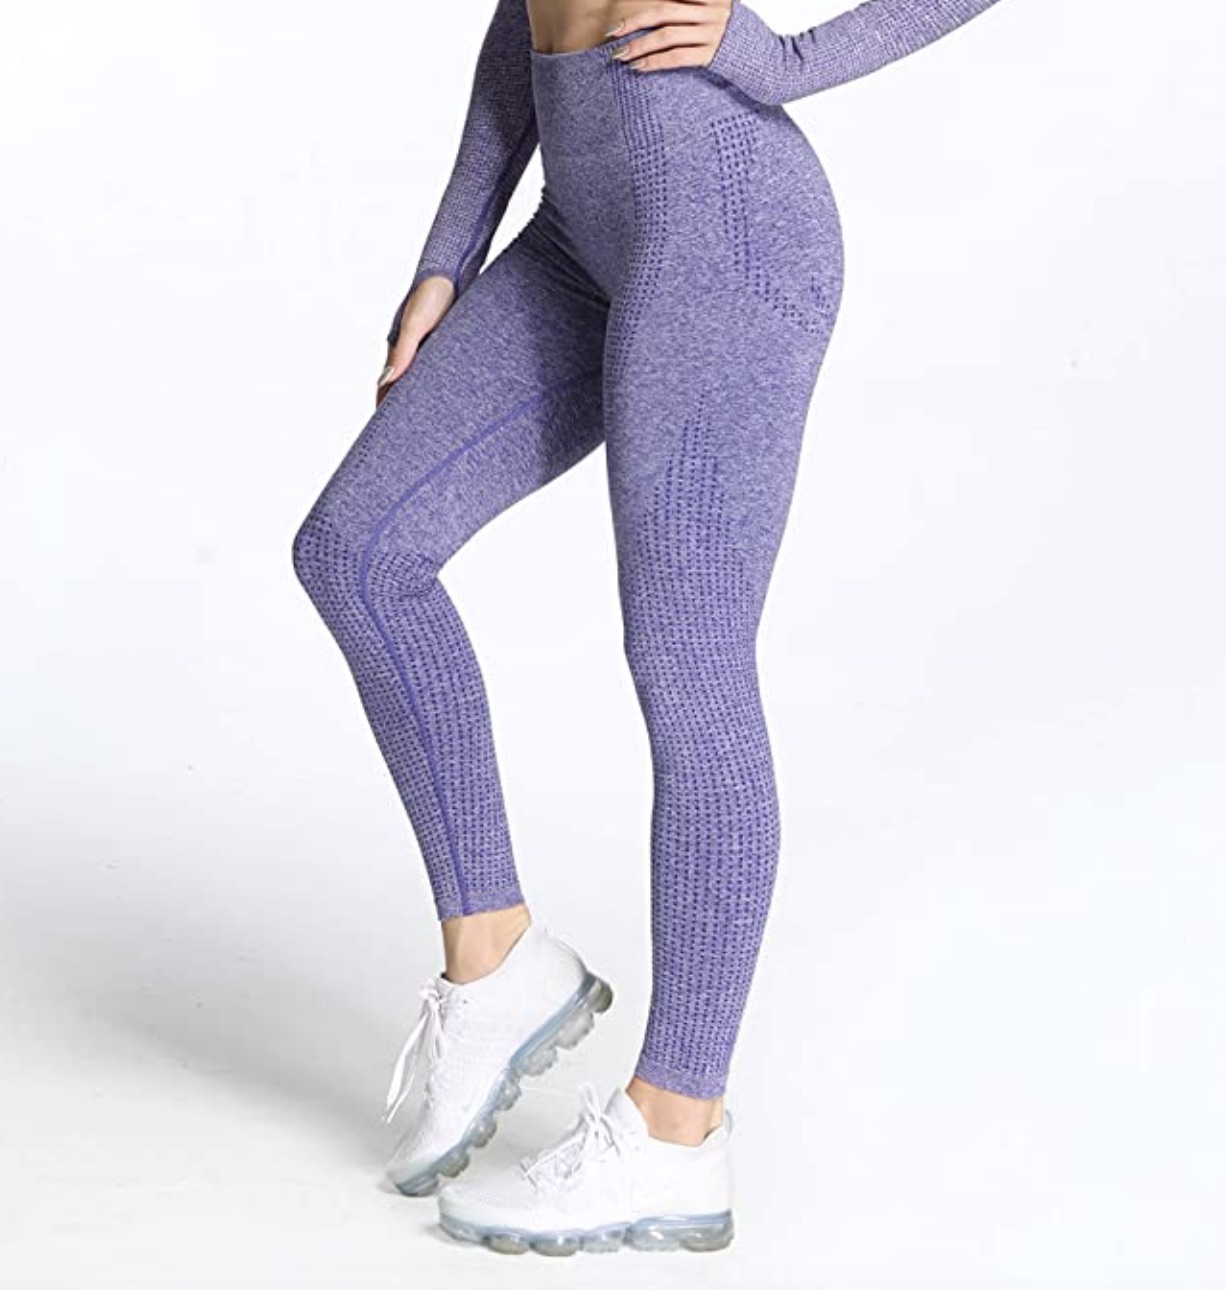 Carbon Fiber Leggings For Women Seamless Squat Proof Womens Athletic Pants 